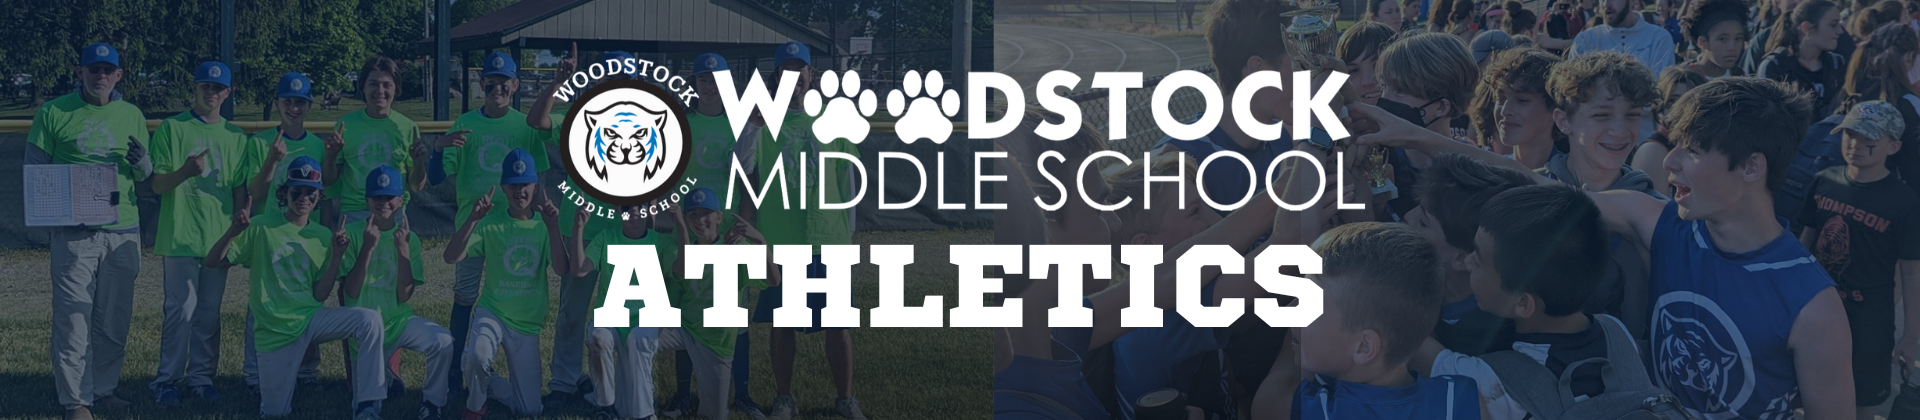 woodstock middle school athletics